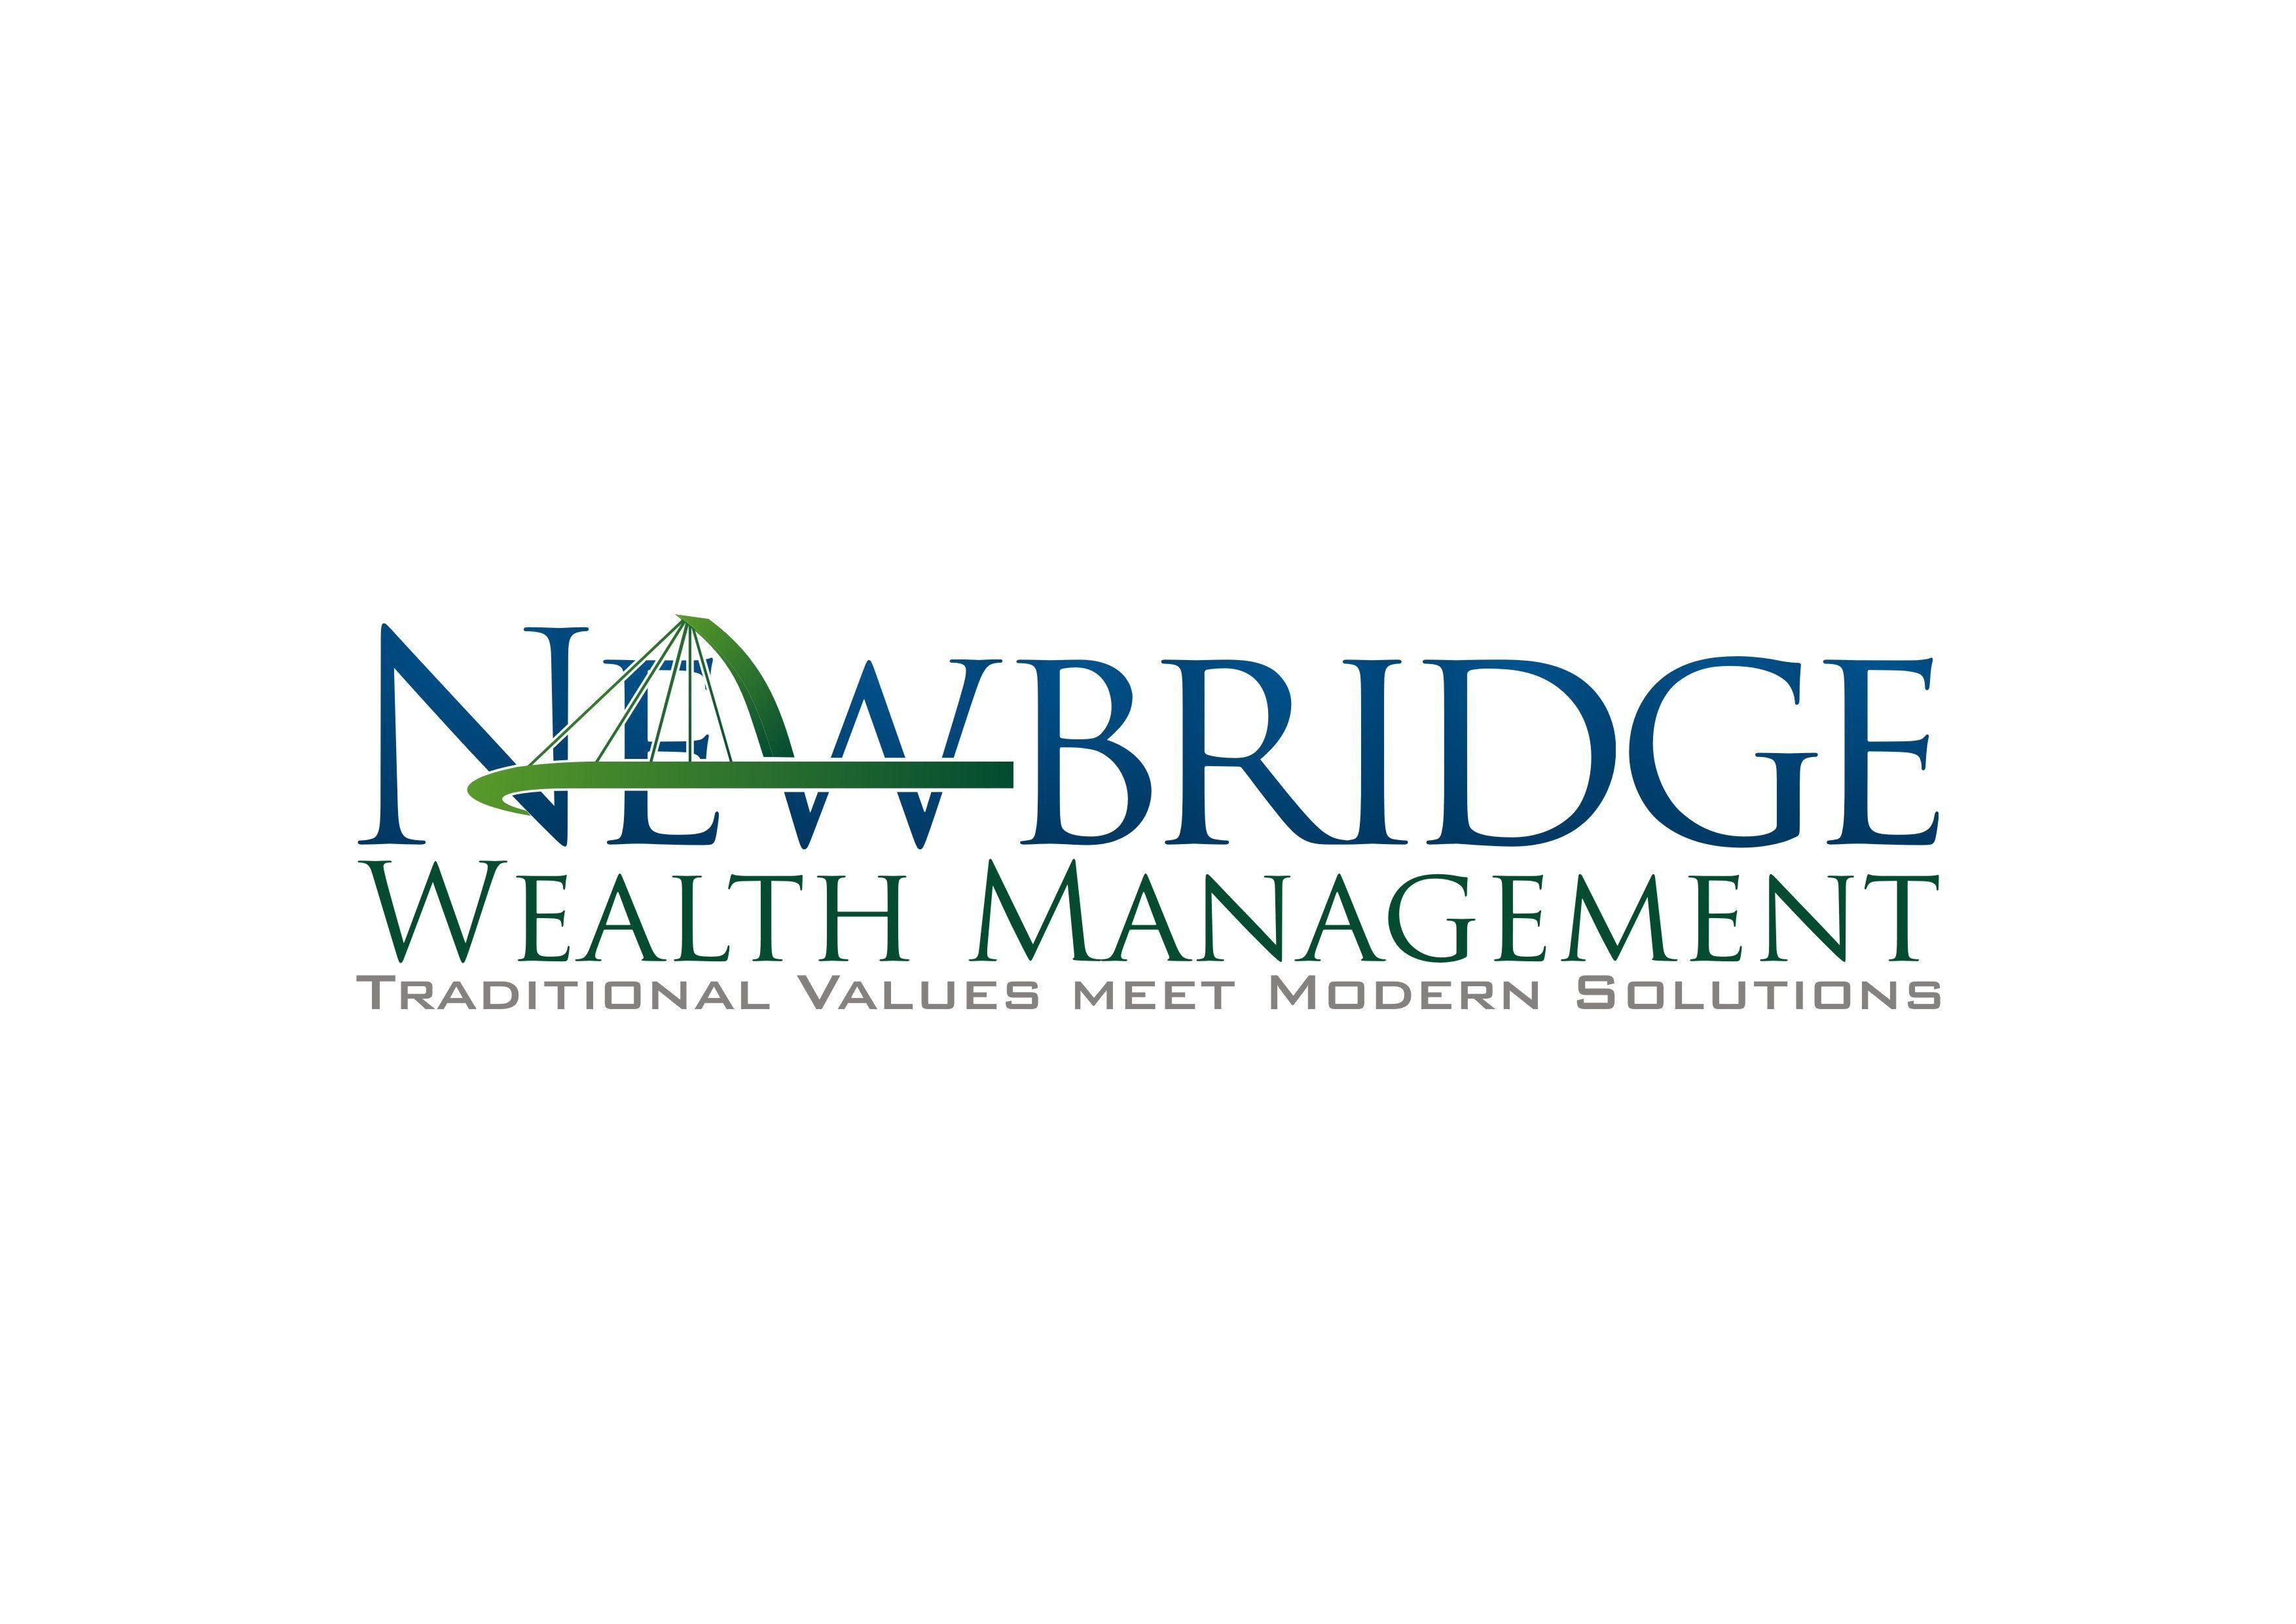 Mgmt Logo - newbridge wealth mgmt logo - familyFOCUS.org